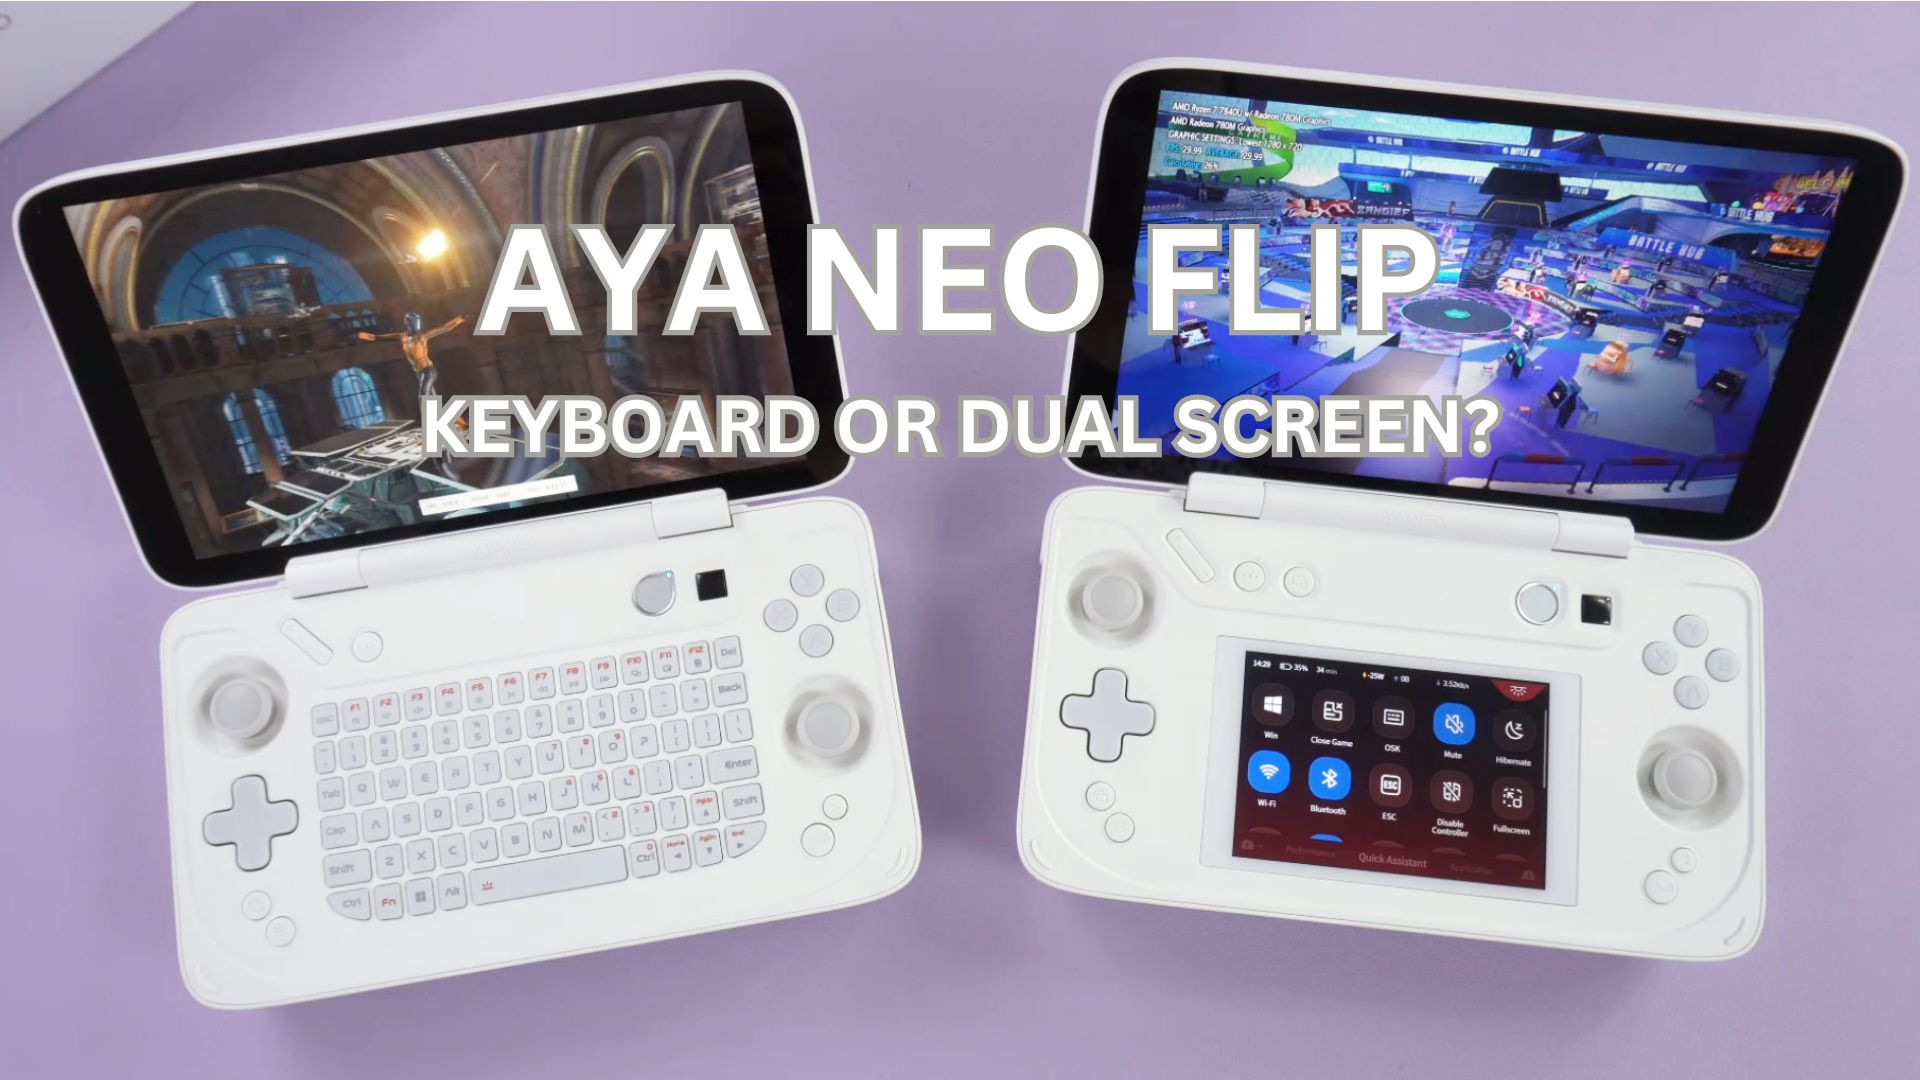 Análisis de AYANEO Flip - Impresionante PC portátil para juegos con teclado o doble pantalla